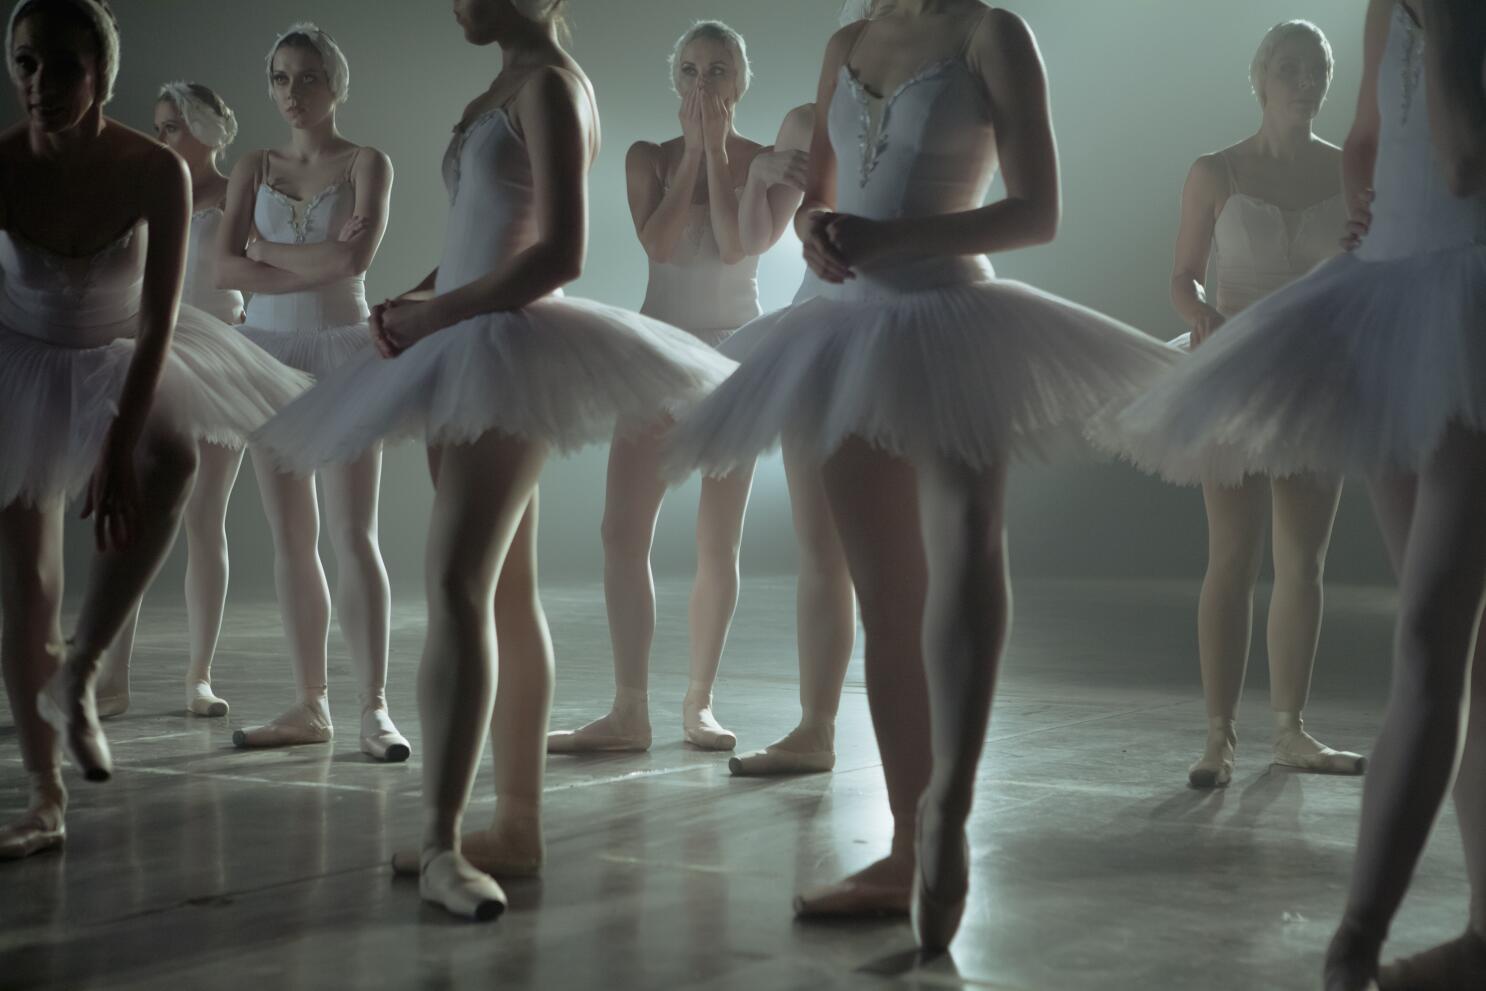 World Ballet Series presents 'Cinderella' at Irvine Barclay Theatre